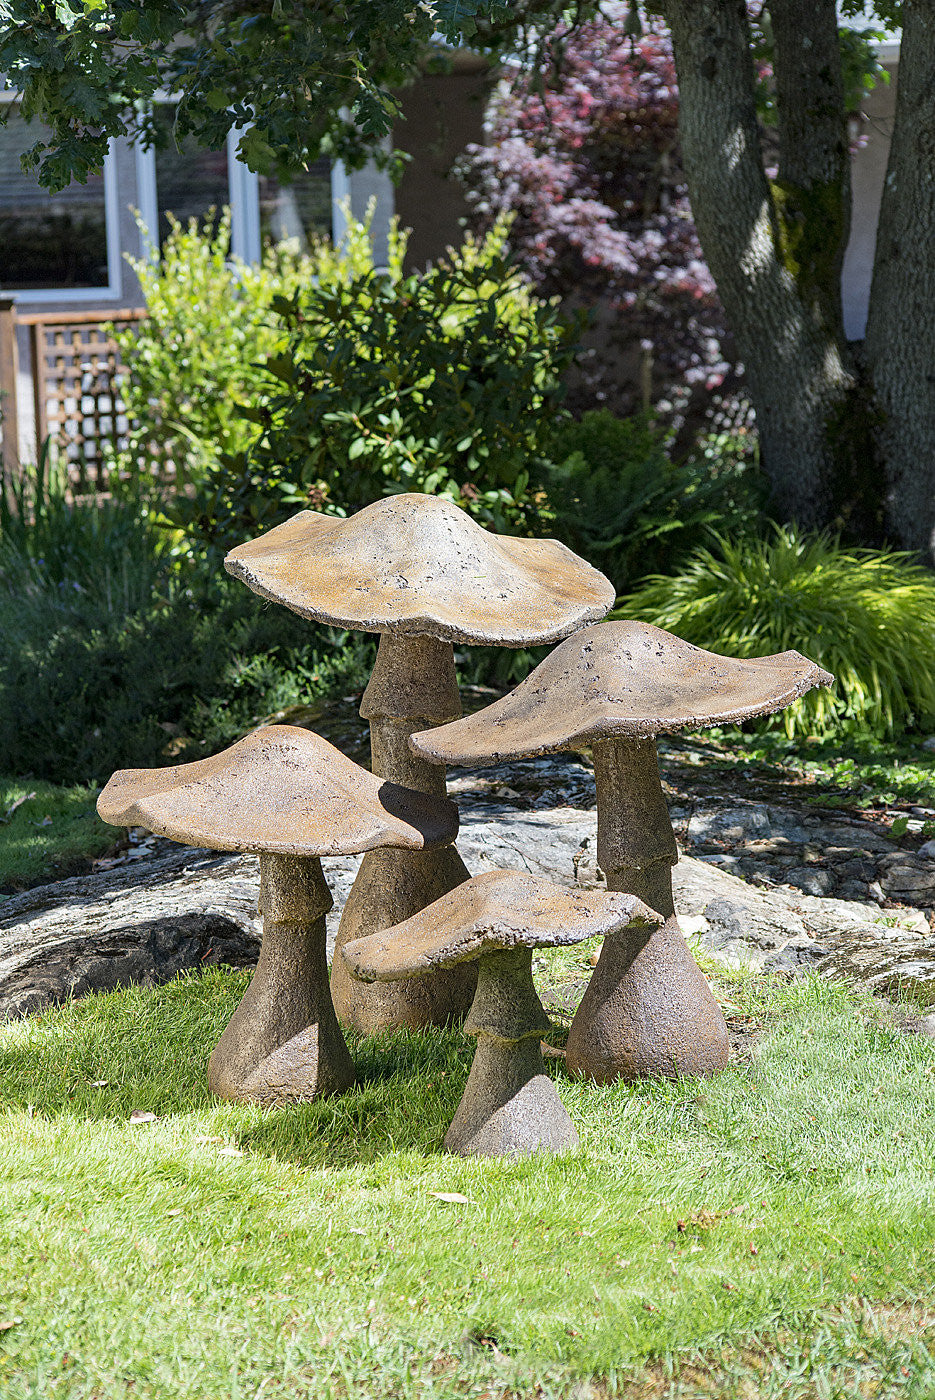 Four Garden Mushrooms in Ancient Stone